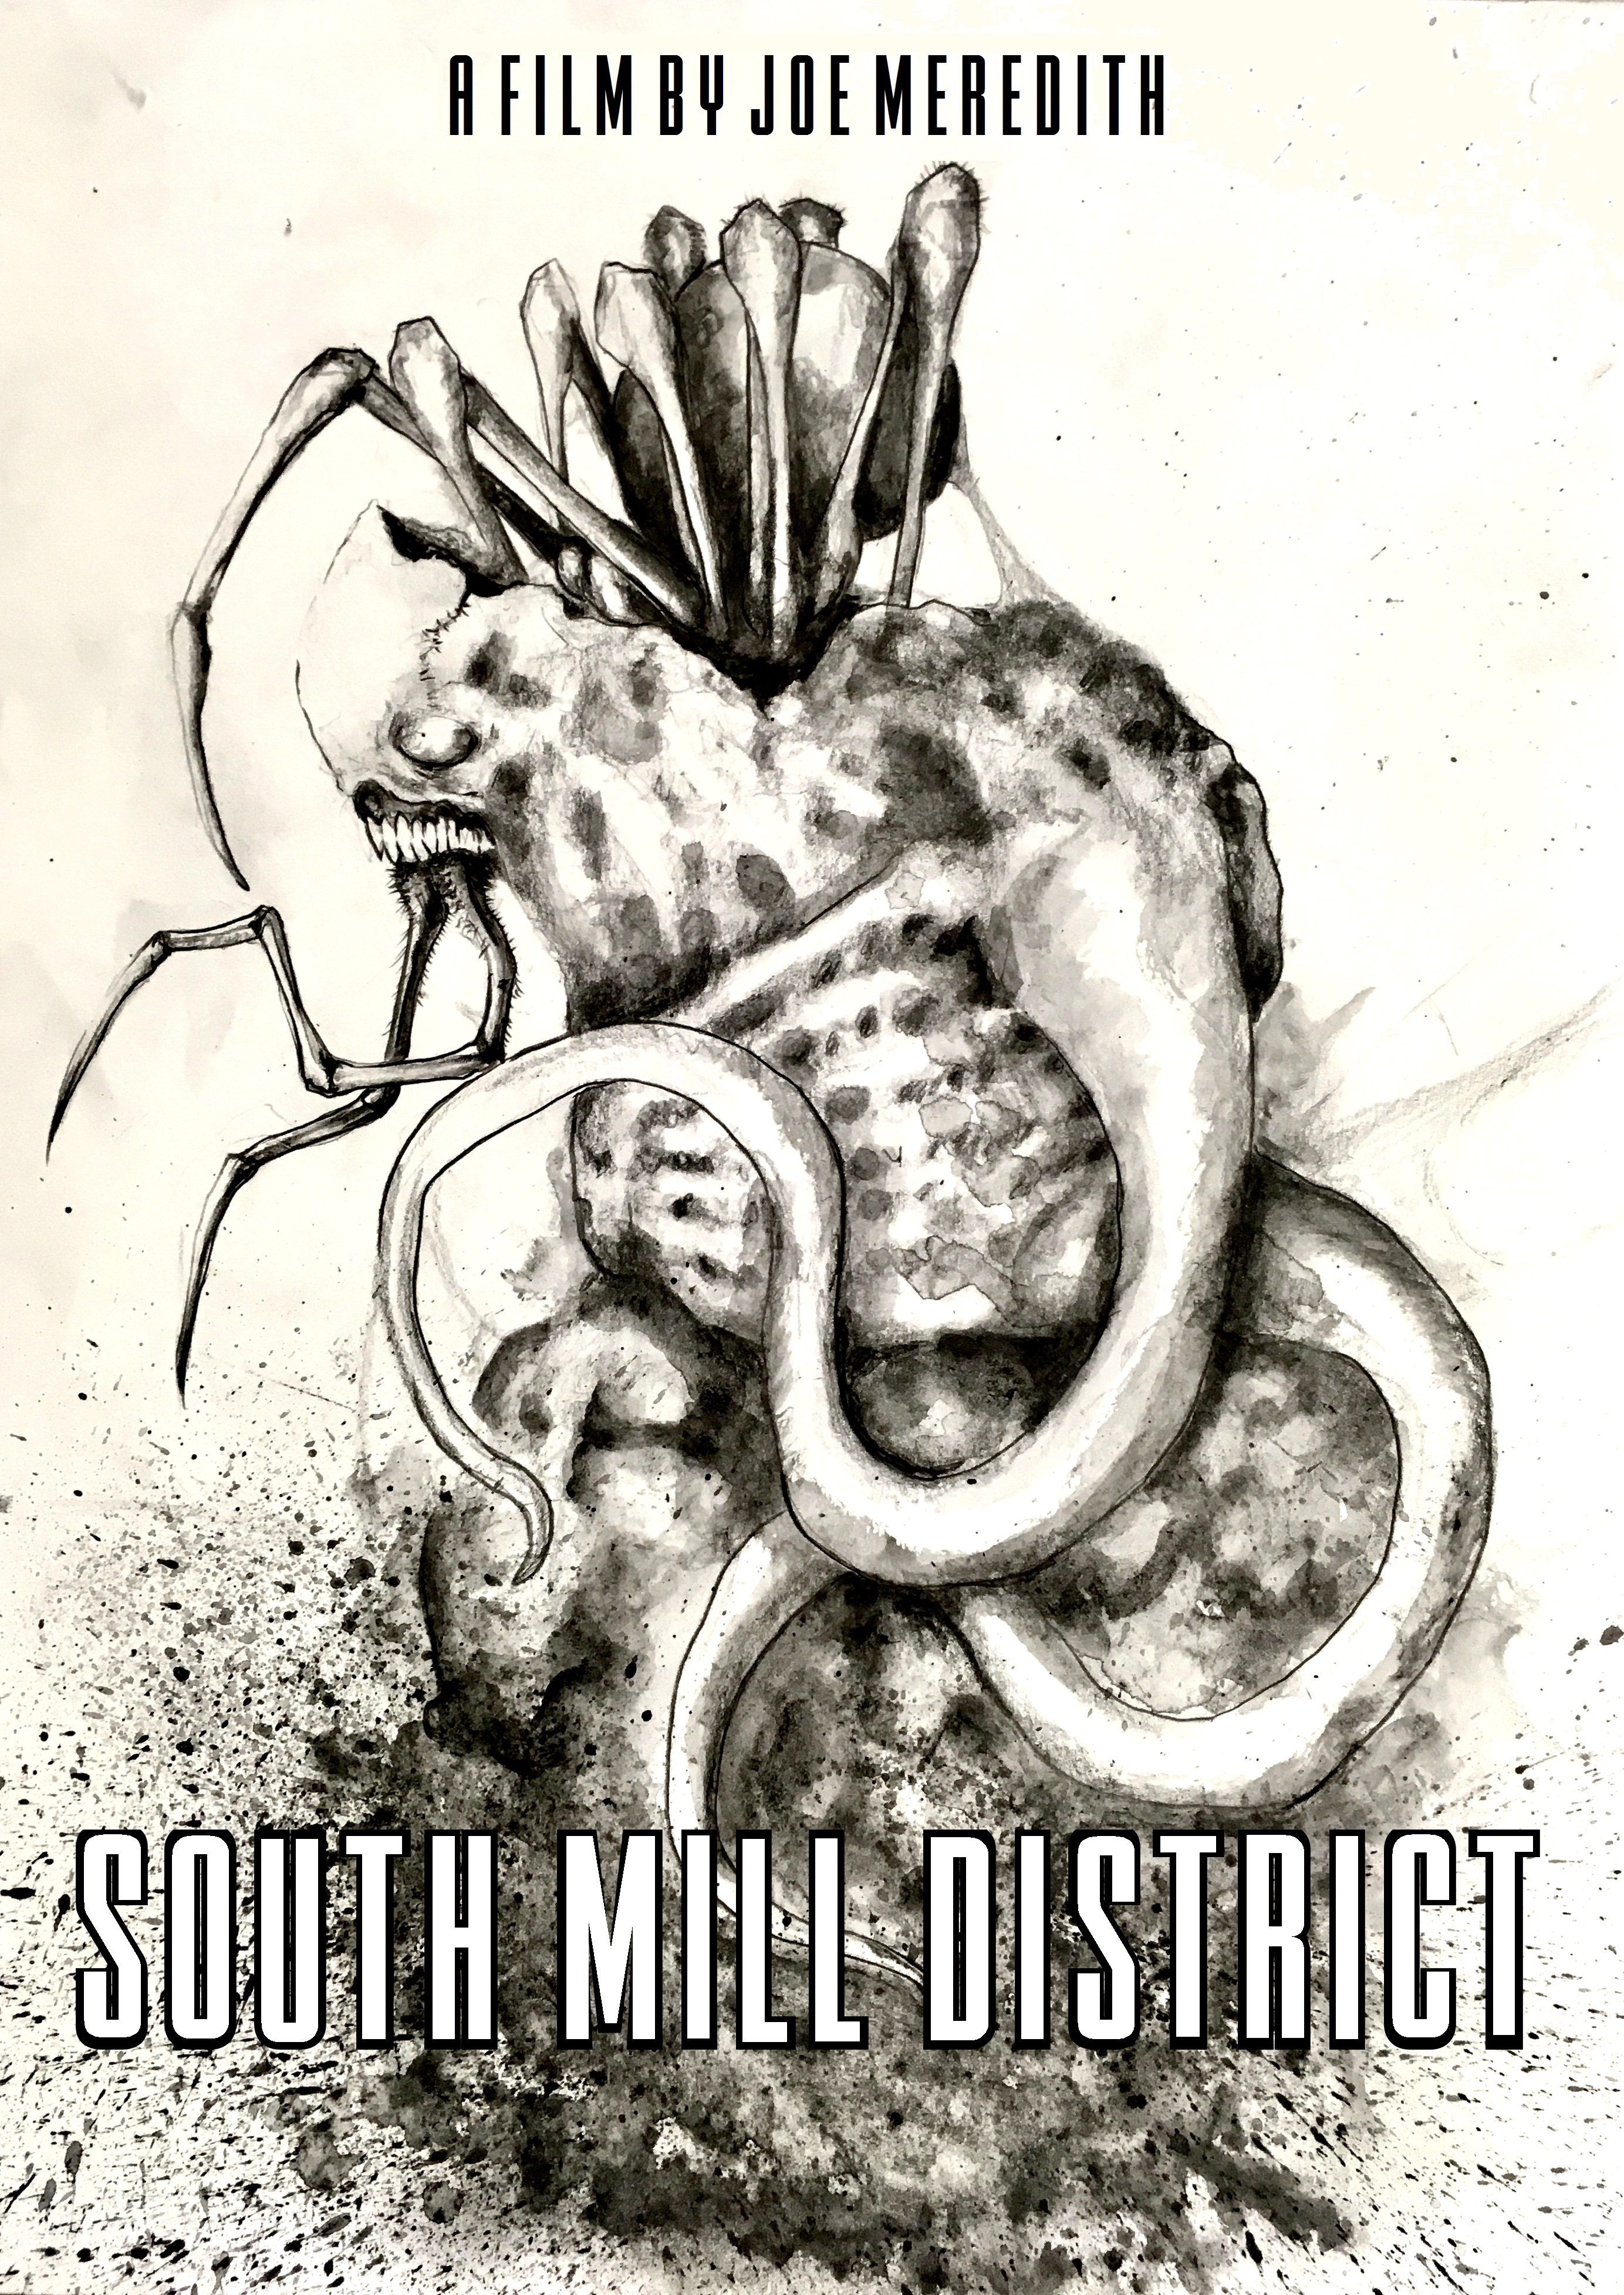 South Mill District (2018) Screenshot 4